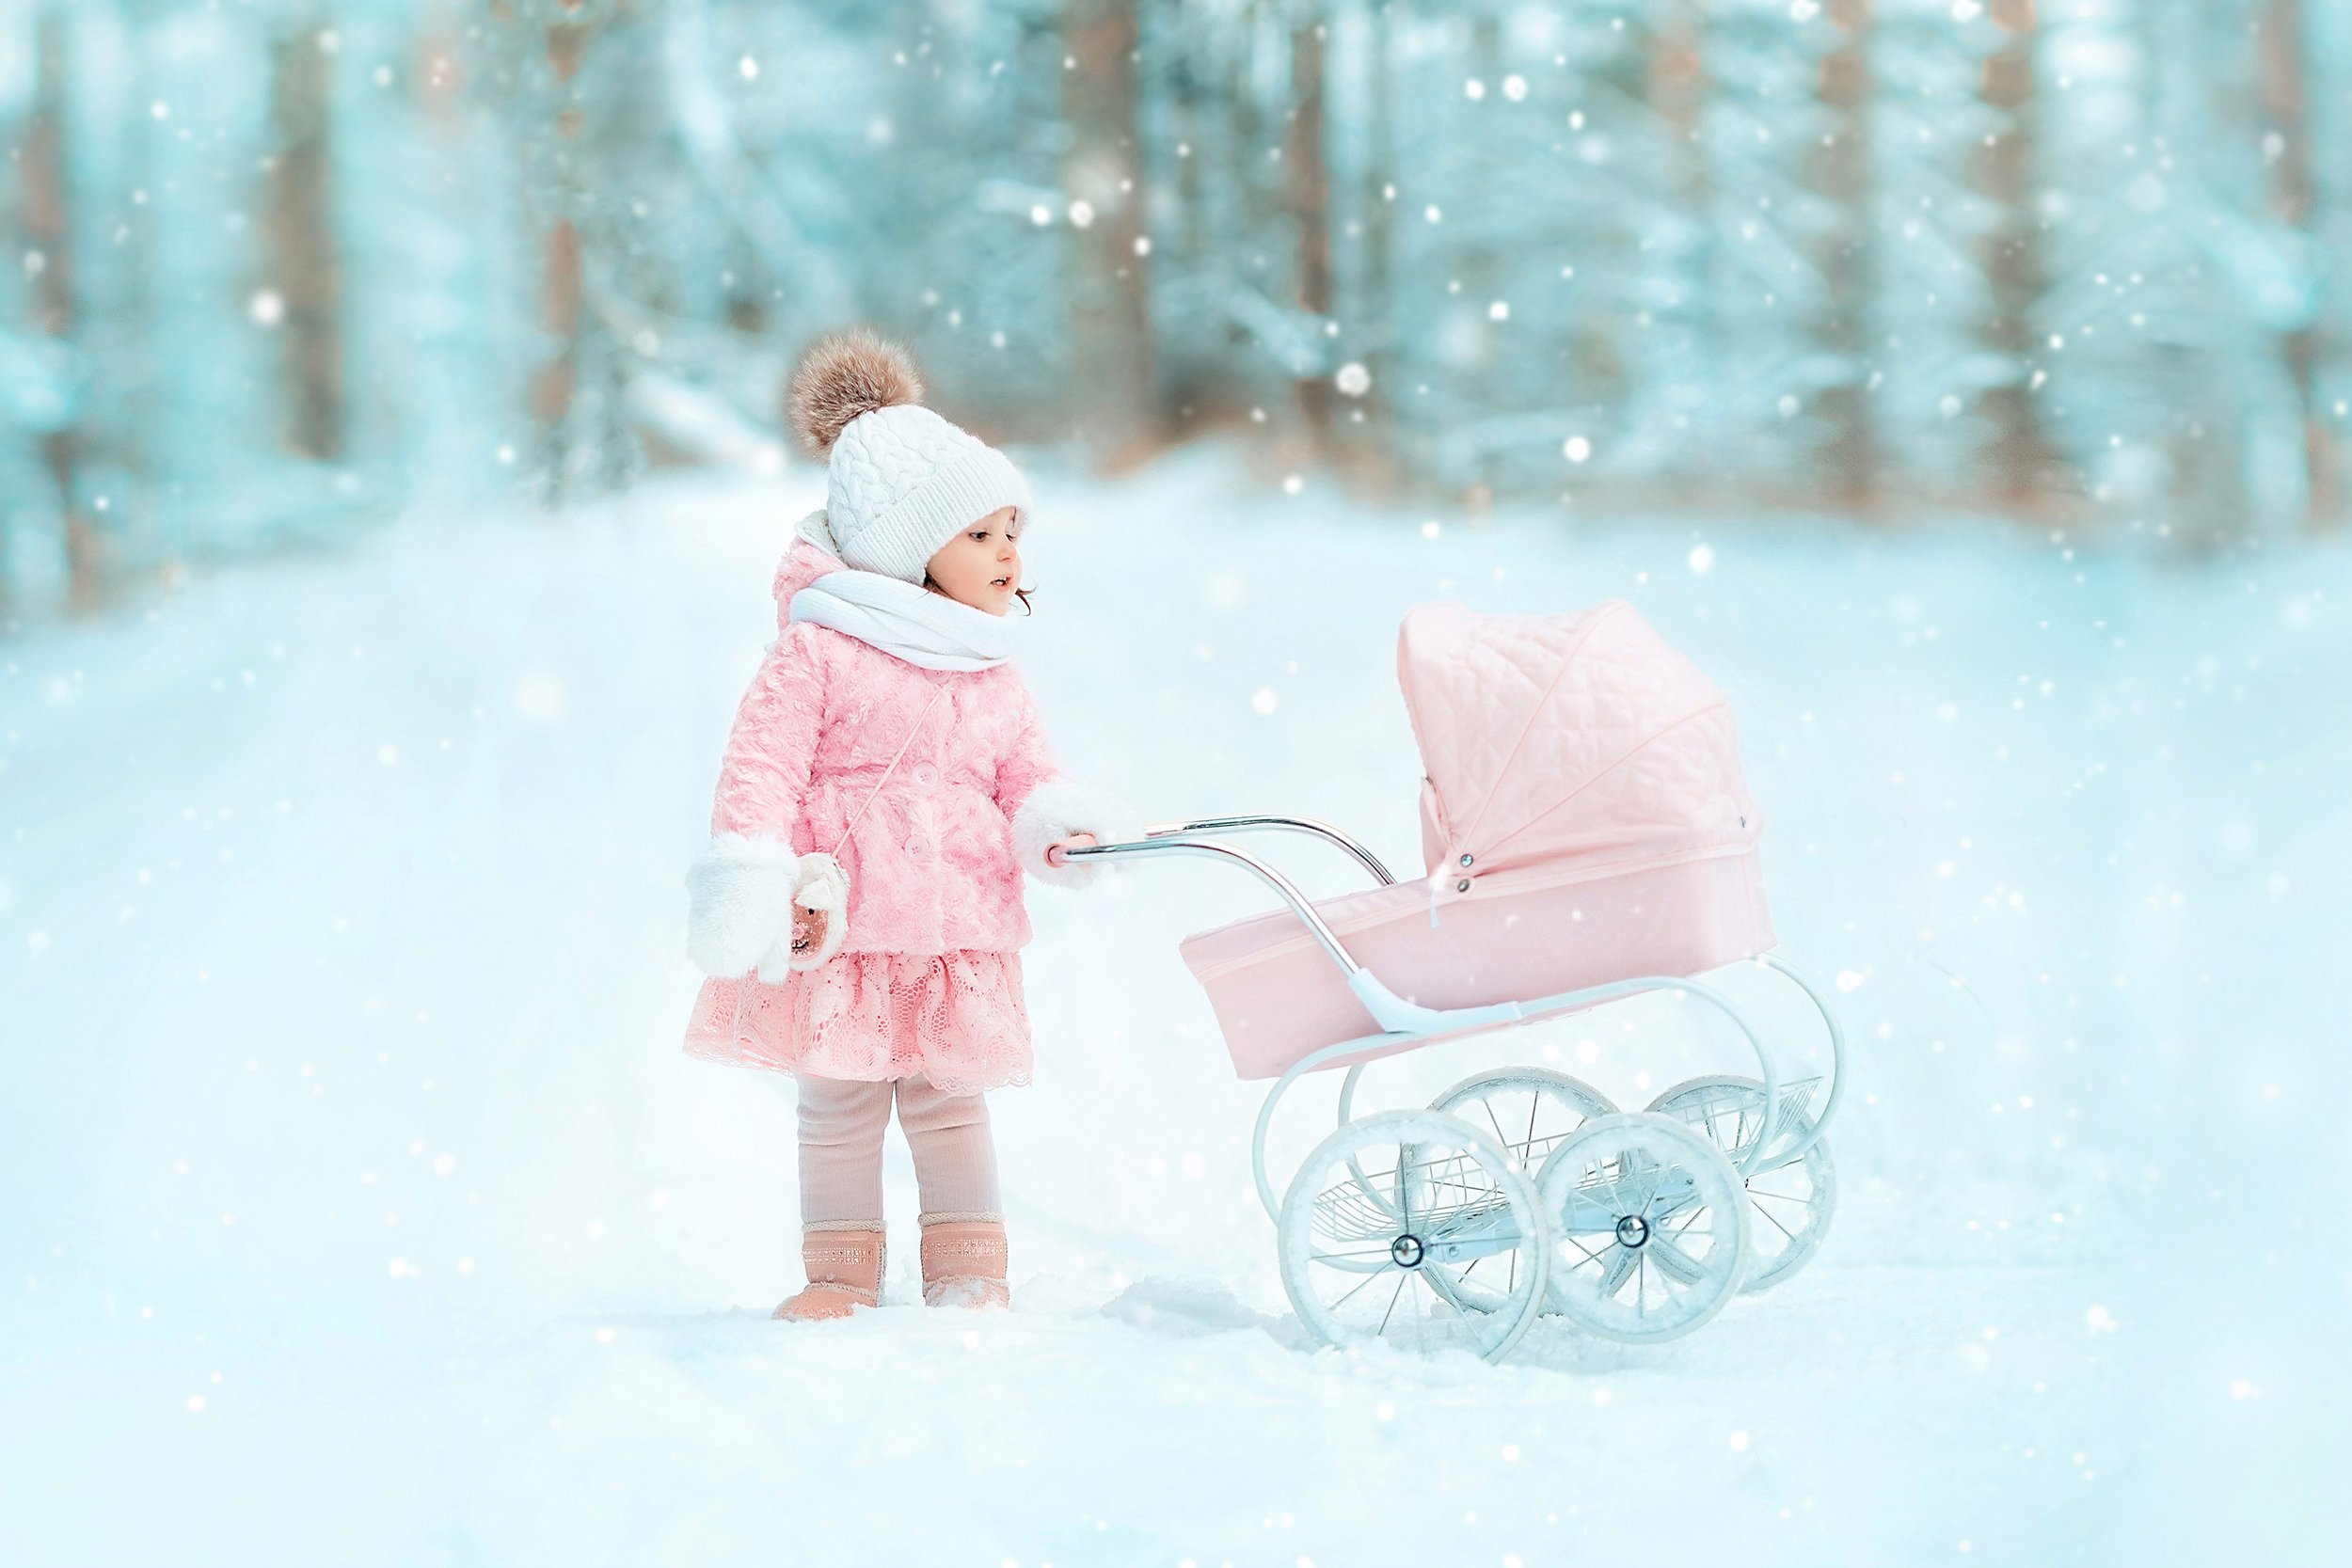 #winter #snow #little #girl #photoatr #photowalk #forest #зима #сказка #девочка, Наталья Карась